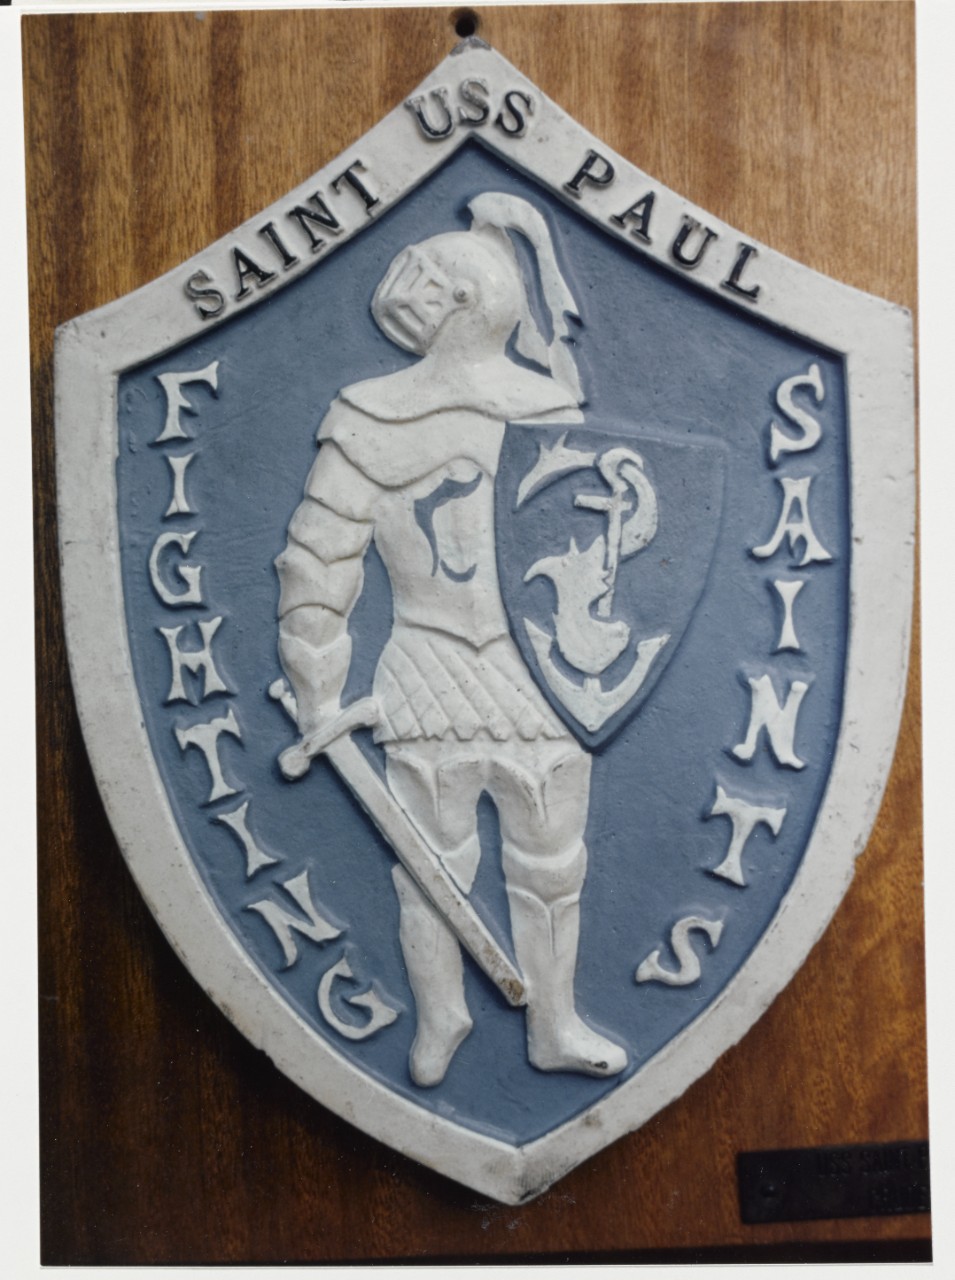 Insignia: USS Saint Paul (CA-73) "Fighting Saints" Emblem of 1950s or 1960s vintage.